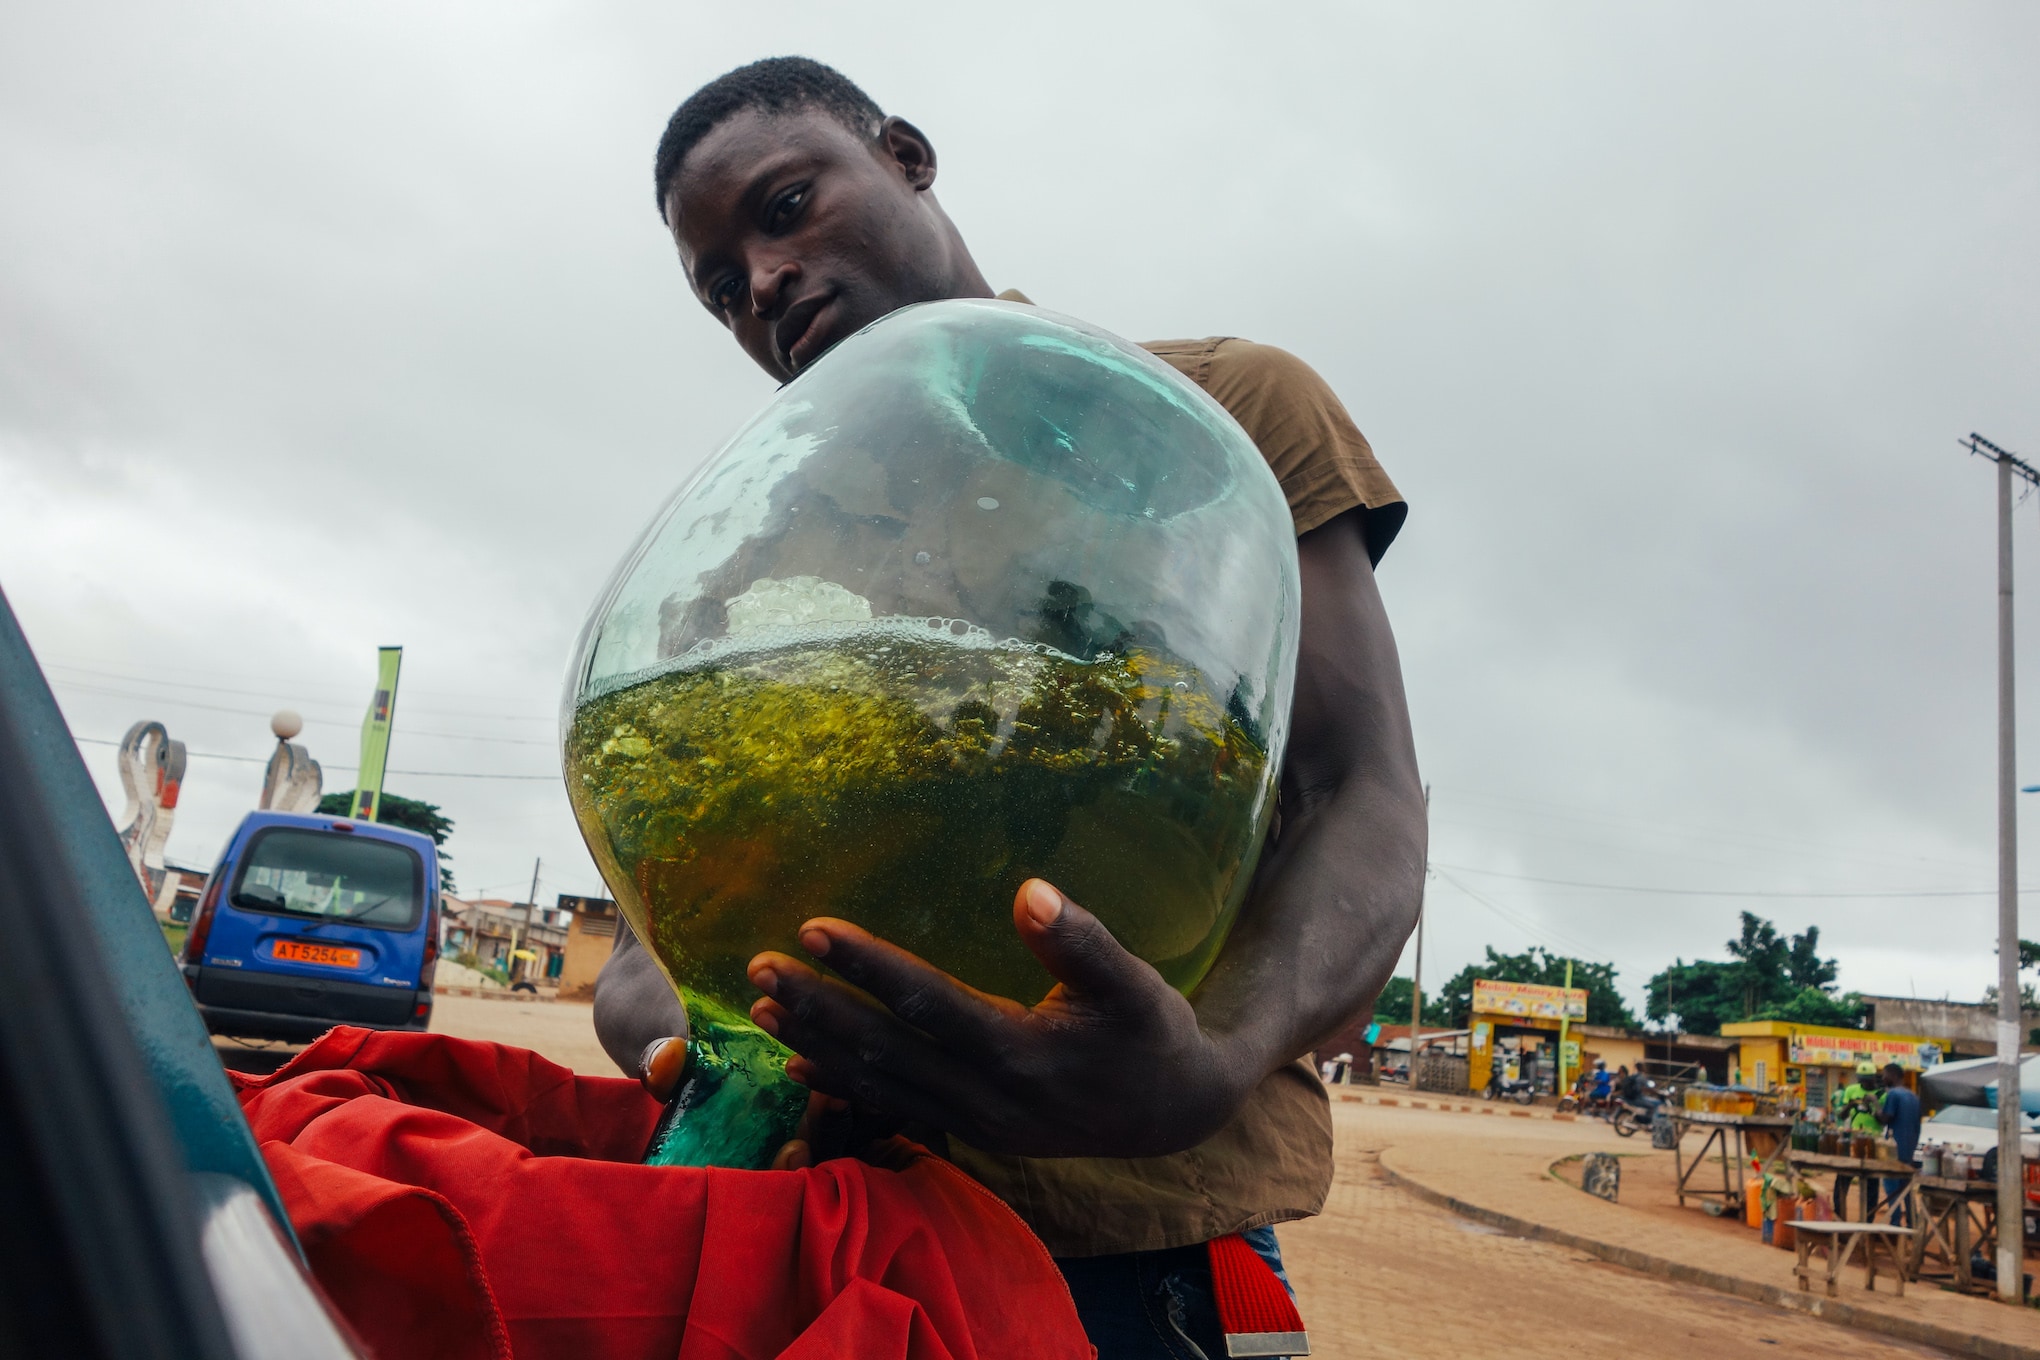 Petrol refill — Porto-Novo, Benin